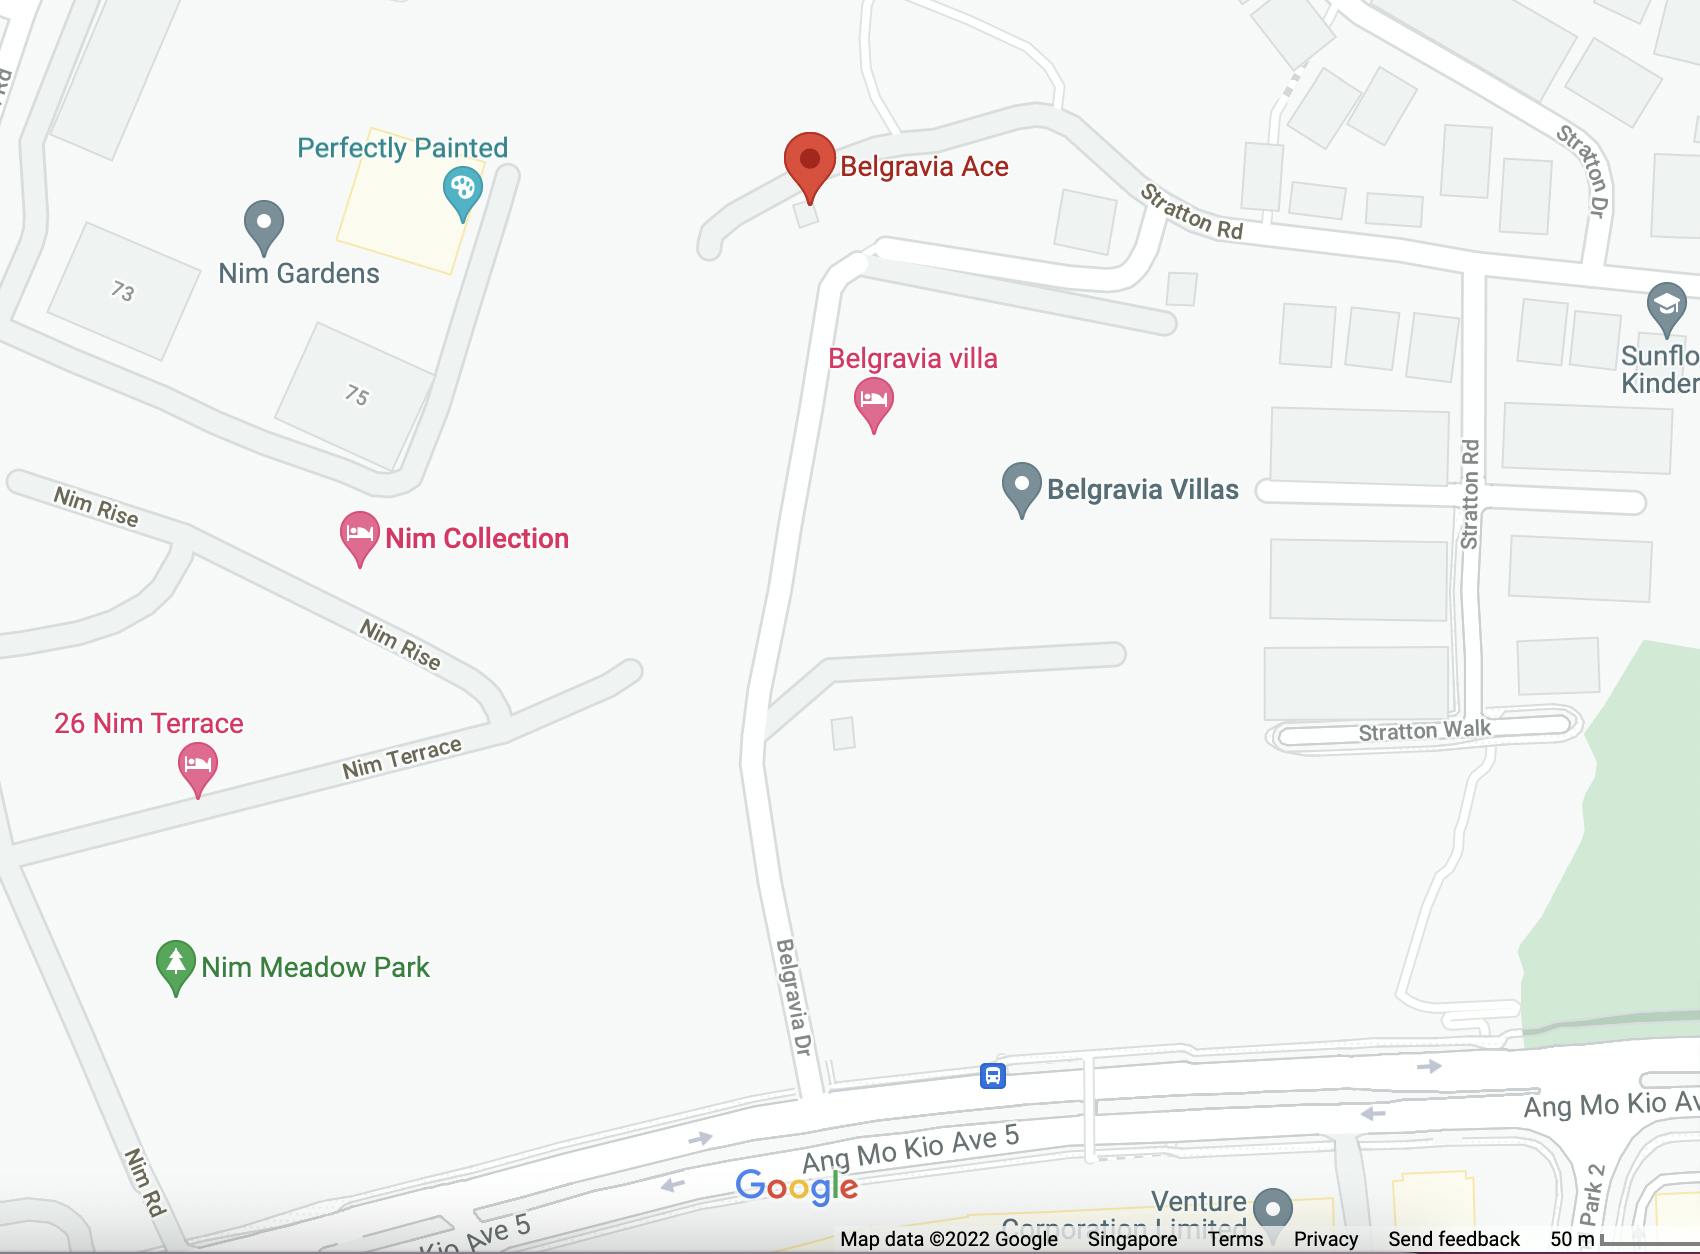 belgravia ace location on google maps